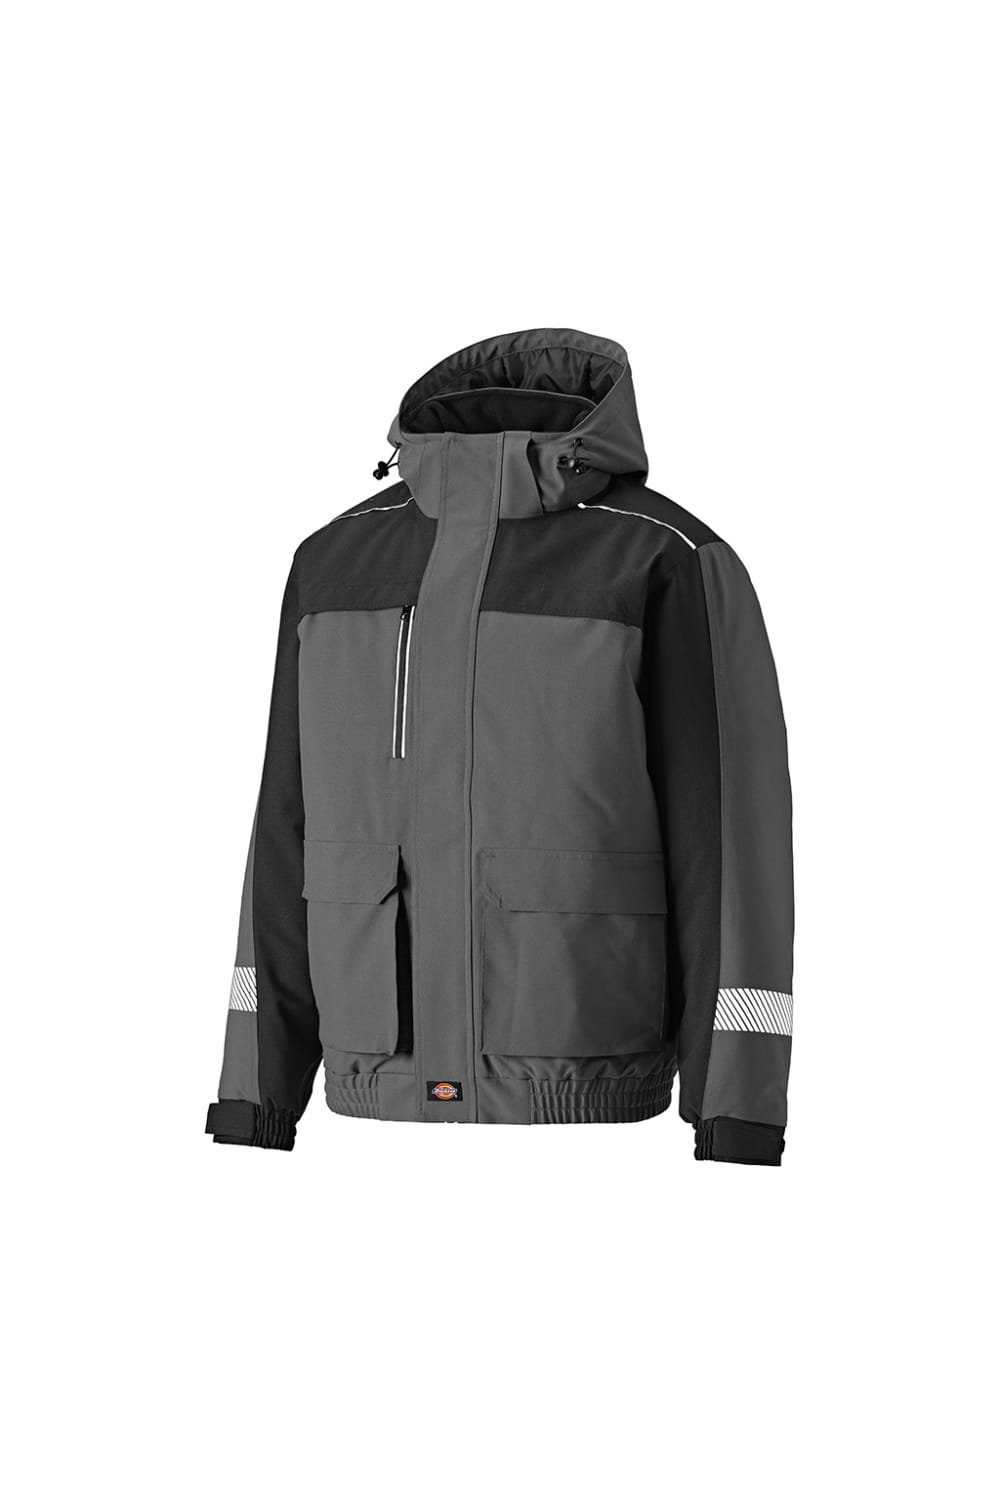 Dickies Adults Unisex Universal Winter Jacket (Gray/Black)